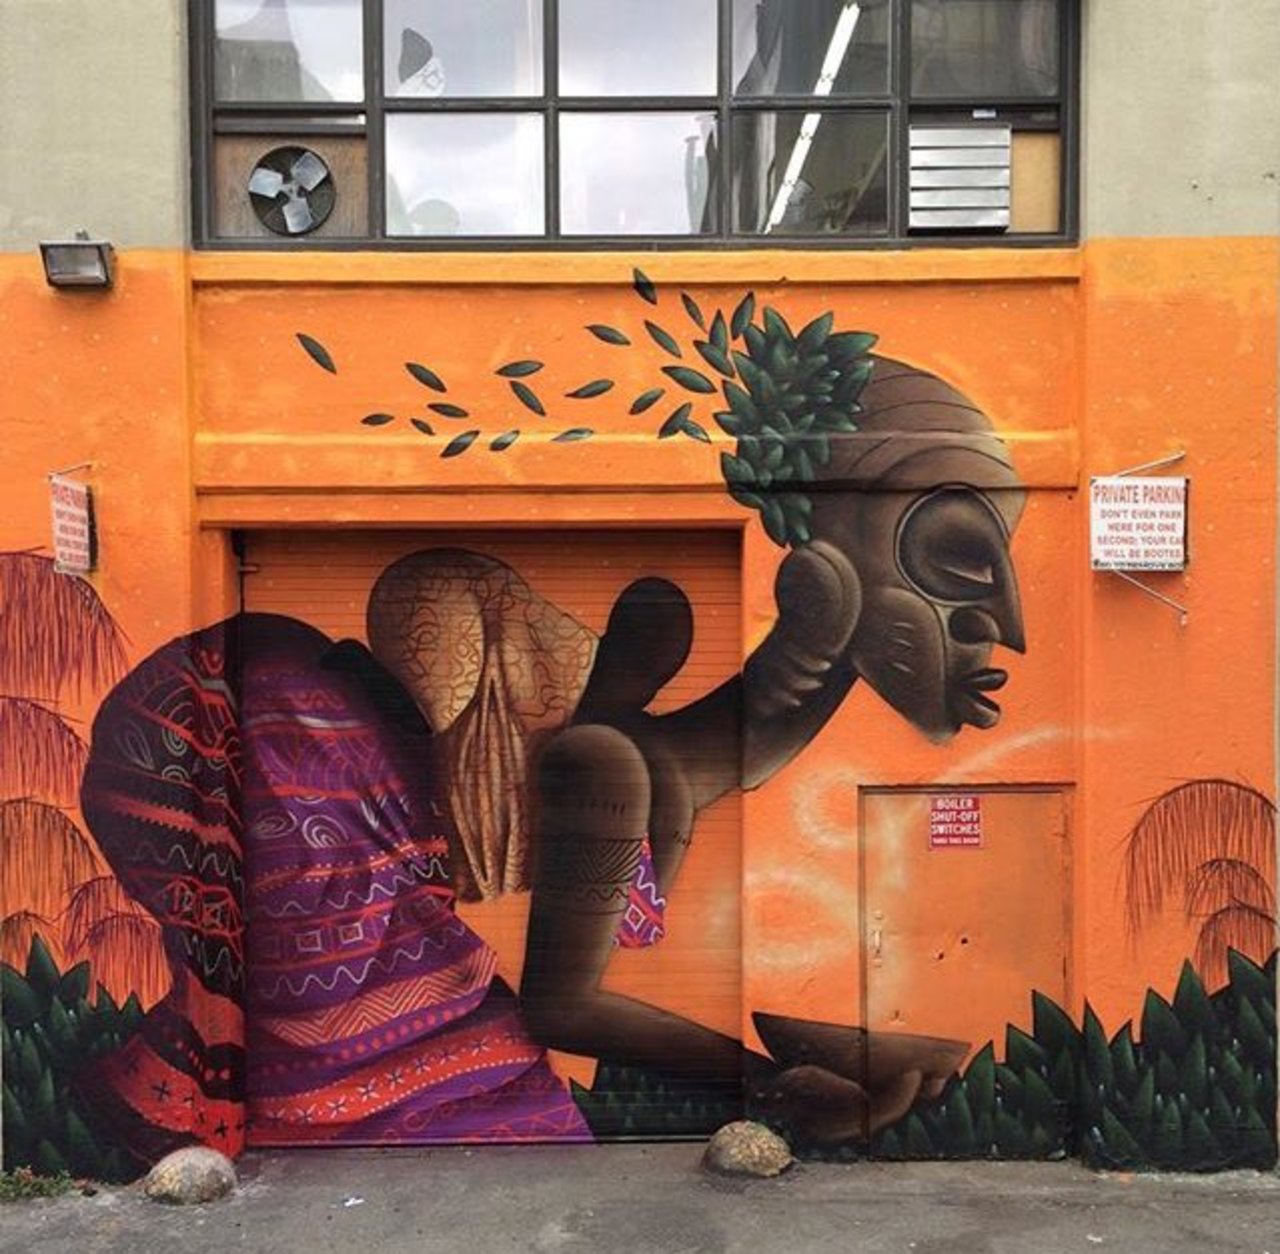 RT @JWoodBeats: New Street Art by Alexandre Keto in NYC 

#art #graffiti #mural #streetart https://t.co/hRoGoCxfJZ